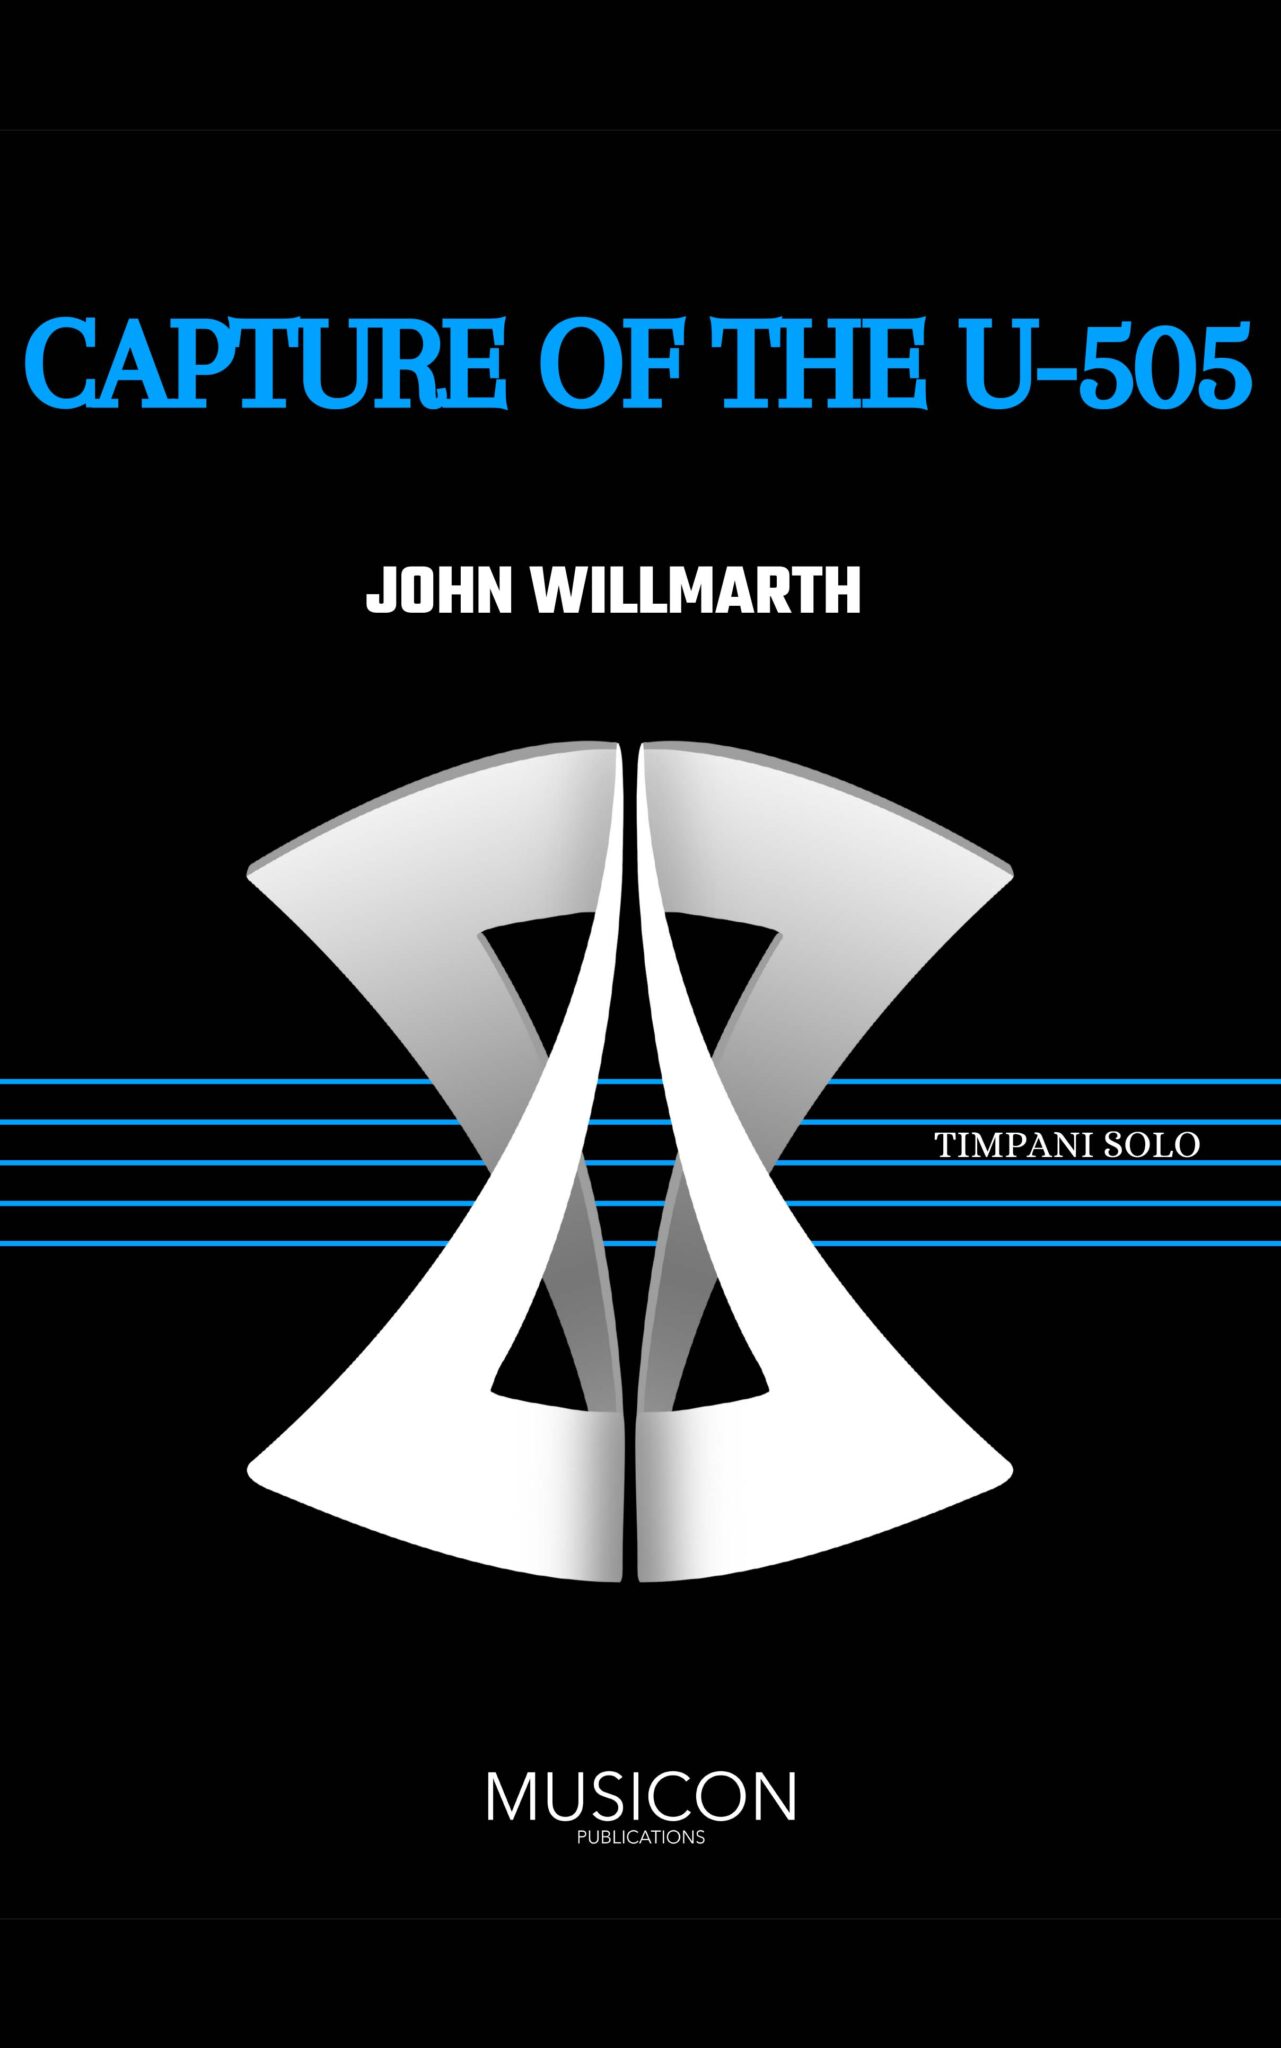 Capture of the U 505 by John Willmarth